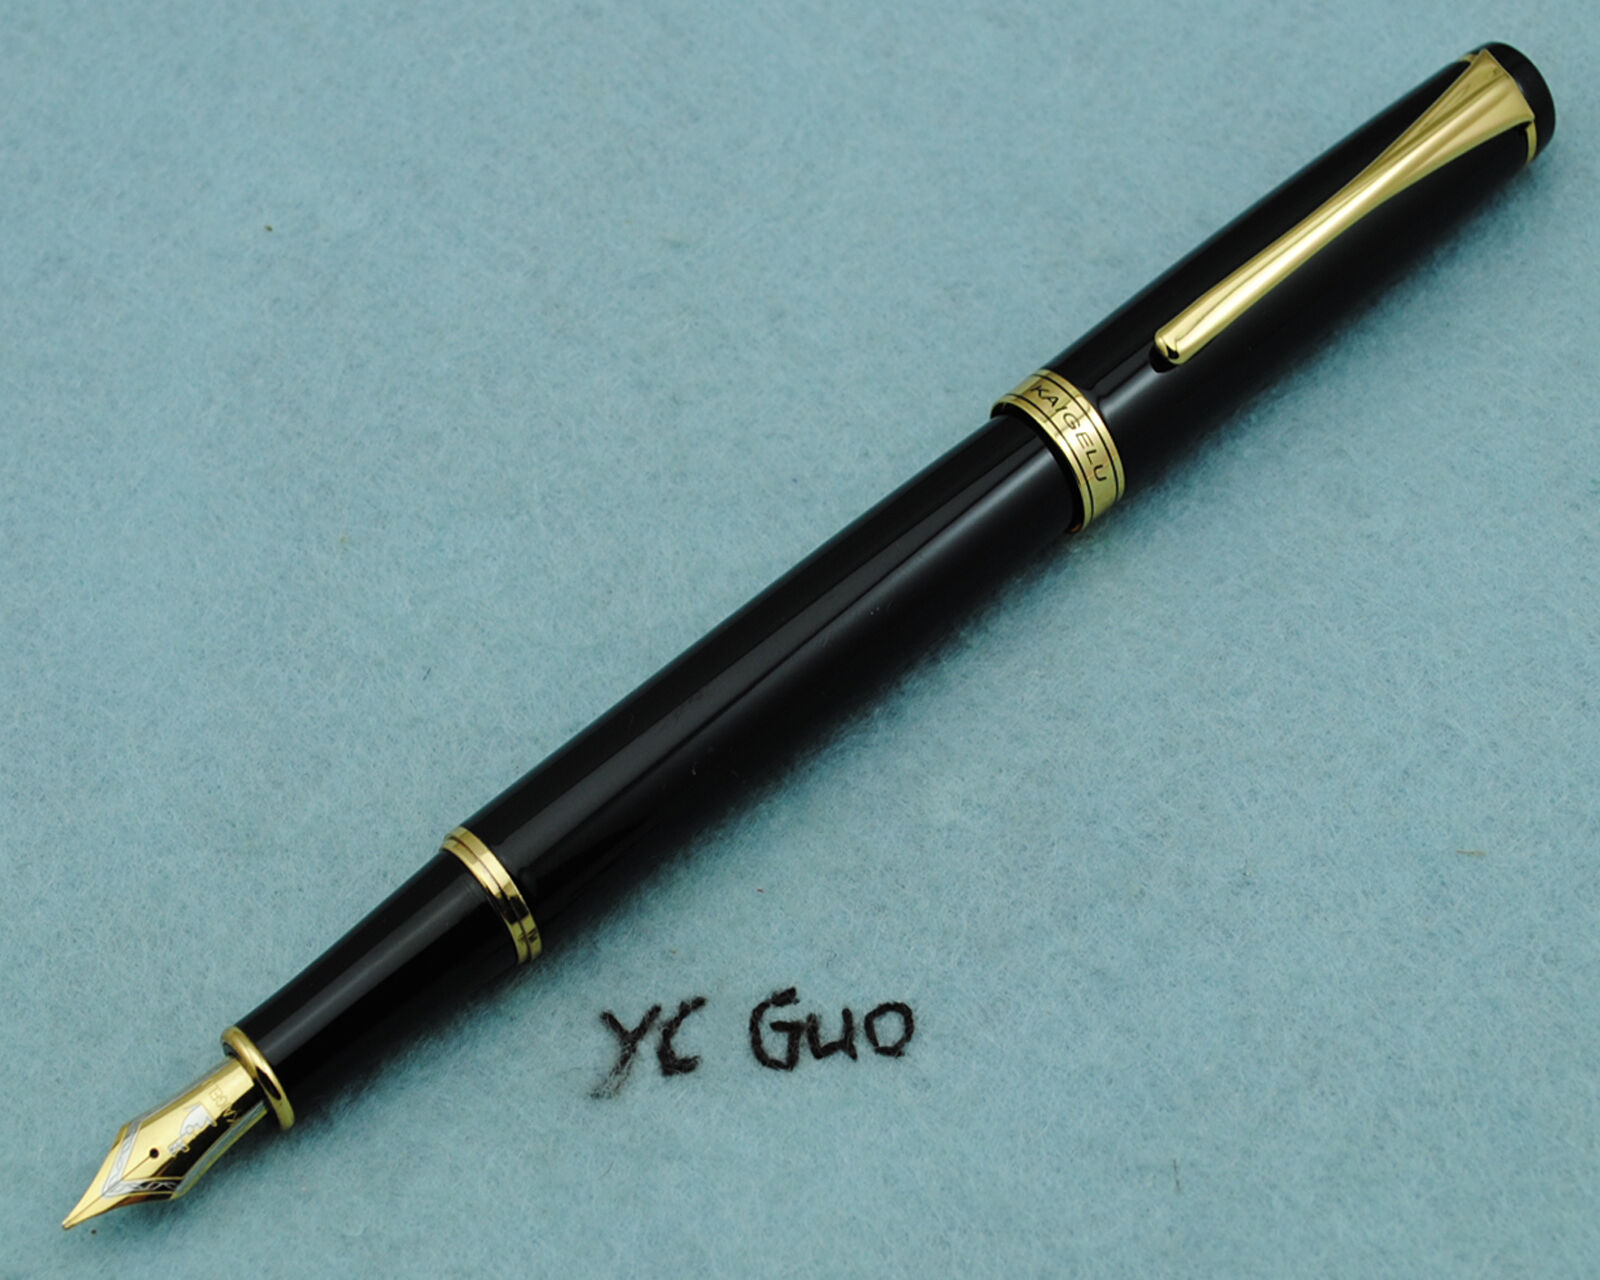 Kaigelu (kangaroo) 382 Black Fountain Pen Medium Nib Without Box